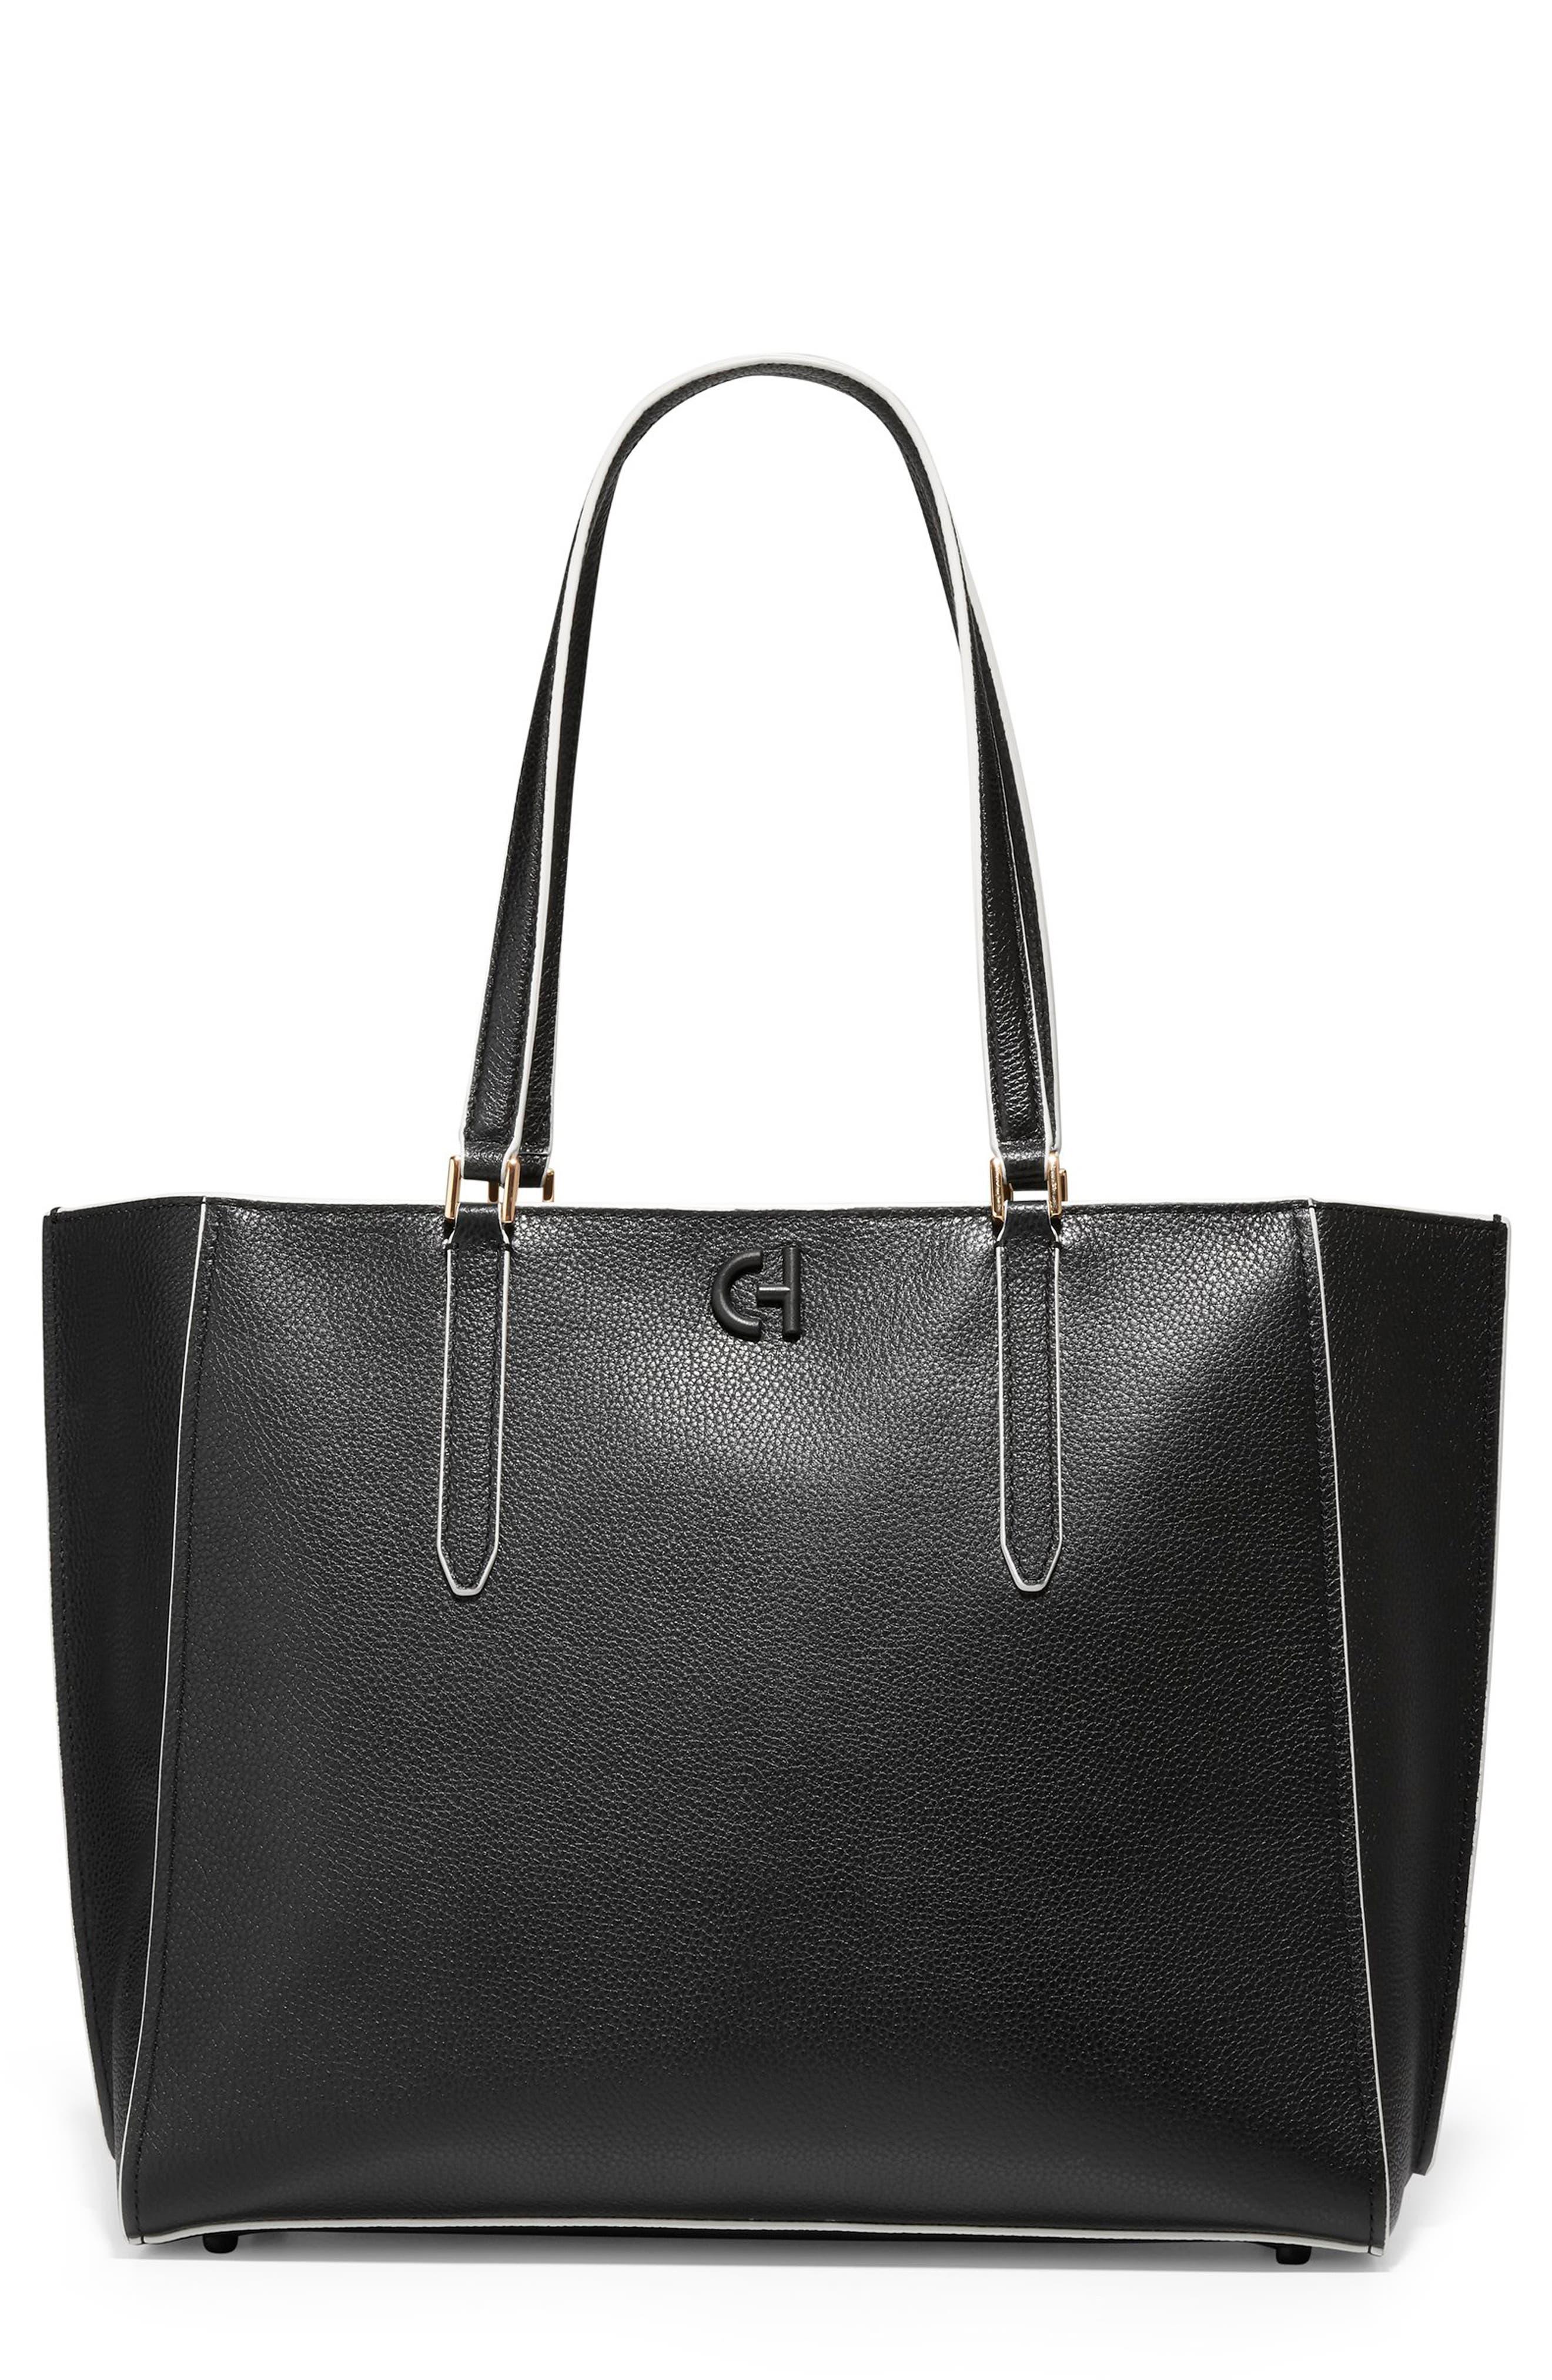 Cole Haan Handbags, Purses & Wallets for Women | Nordstrom